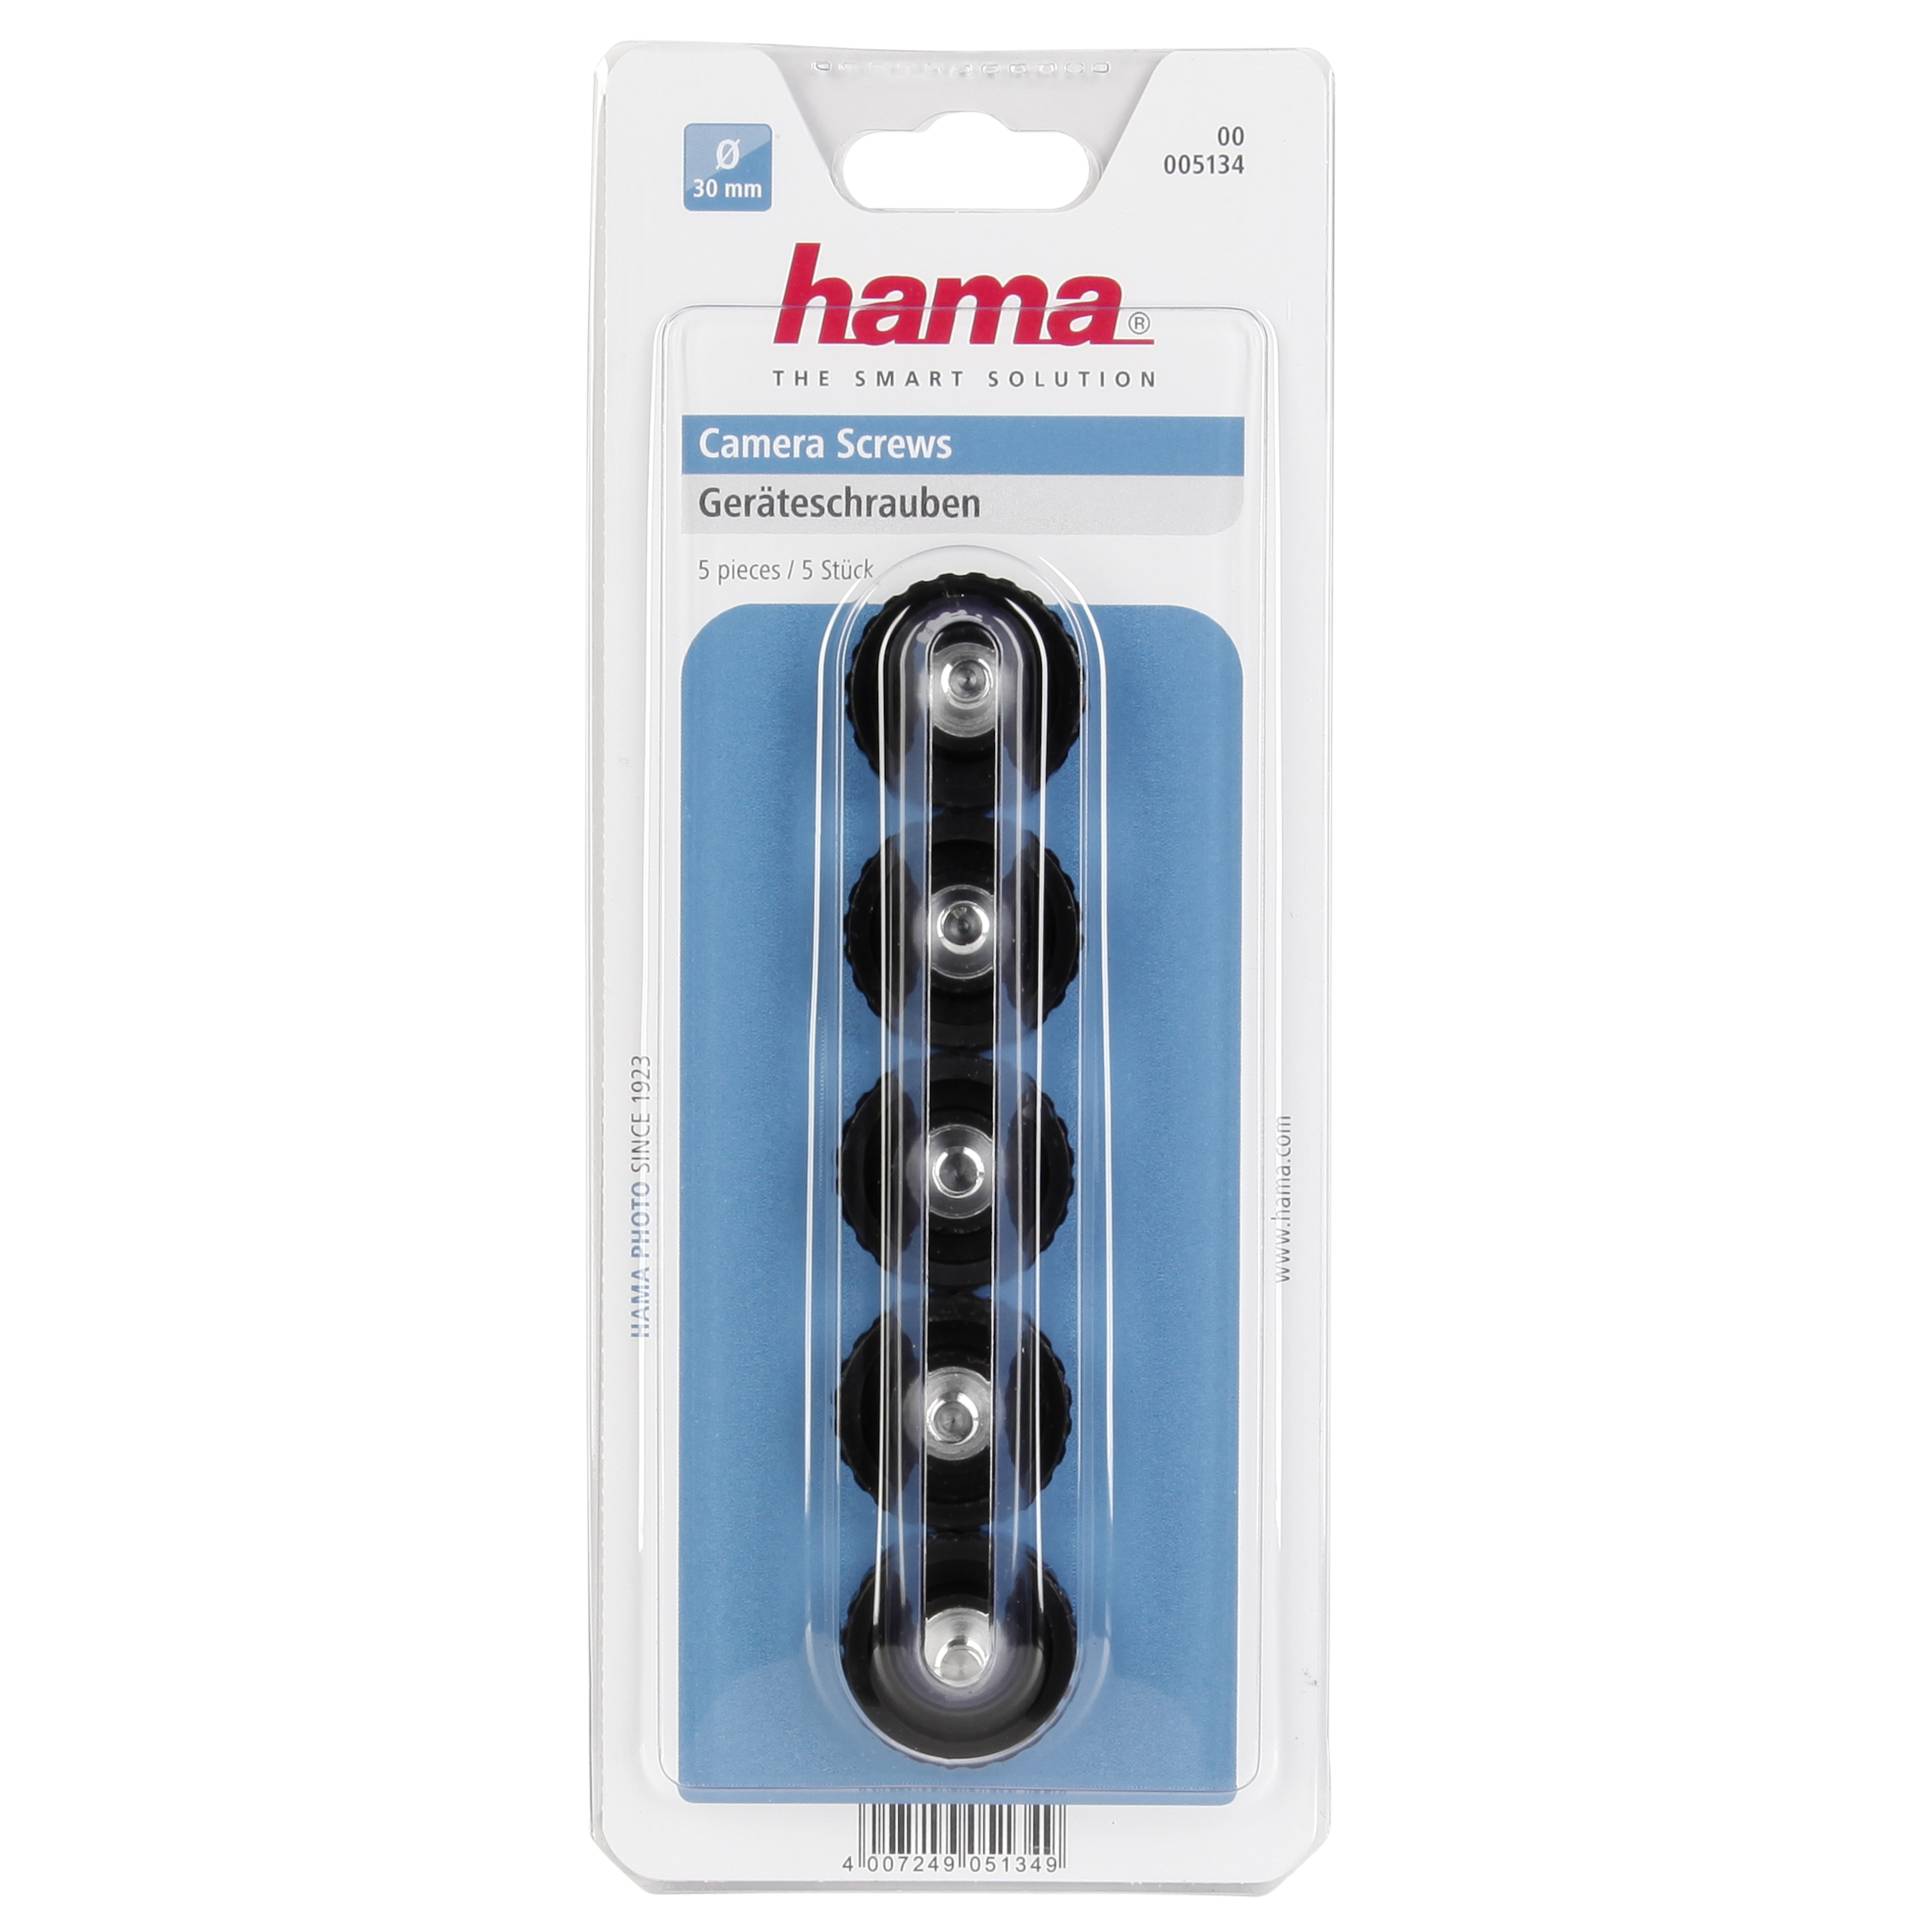 Hama Camera Screws 11 mm 1/4  (5 pcs)              5134